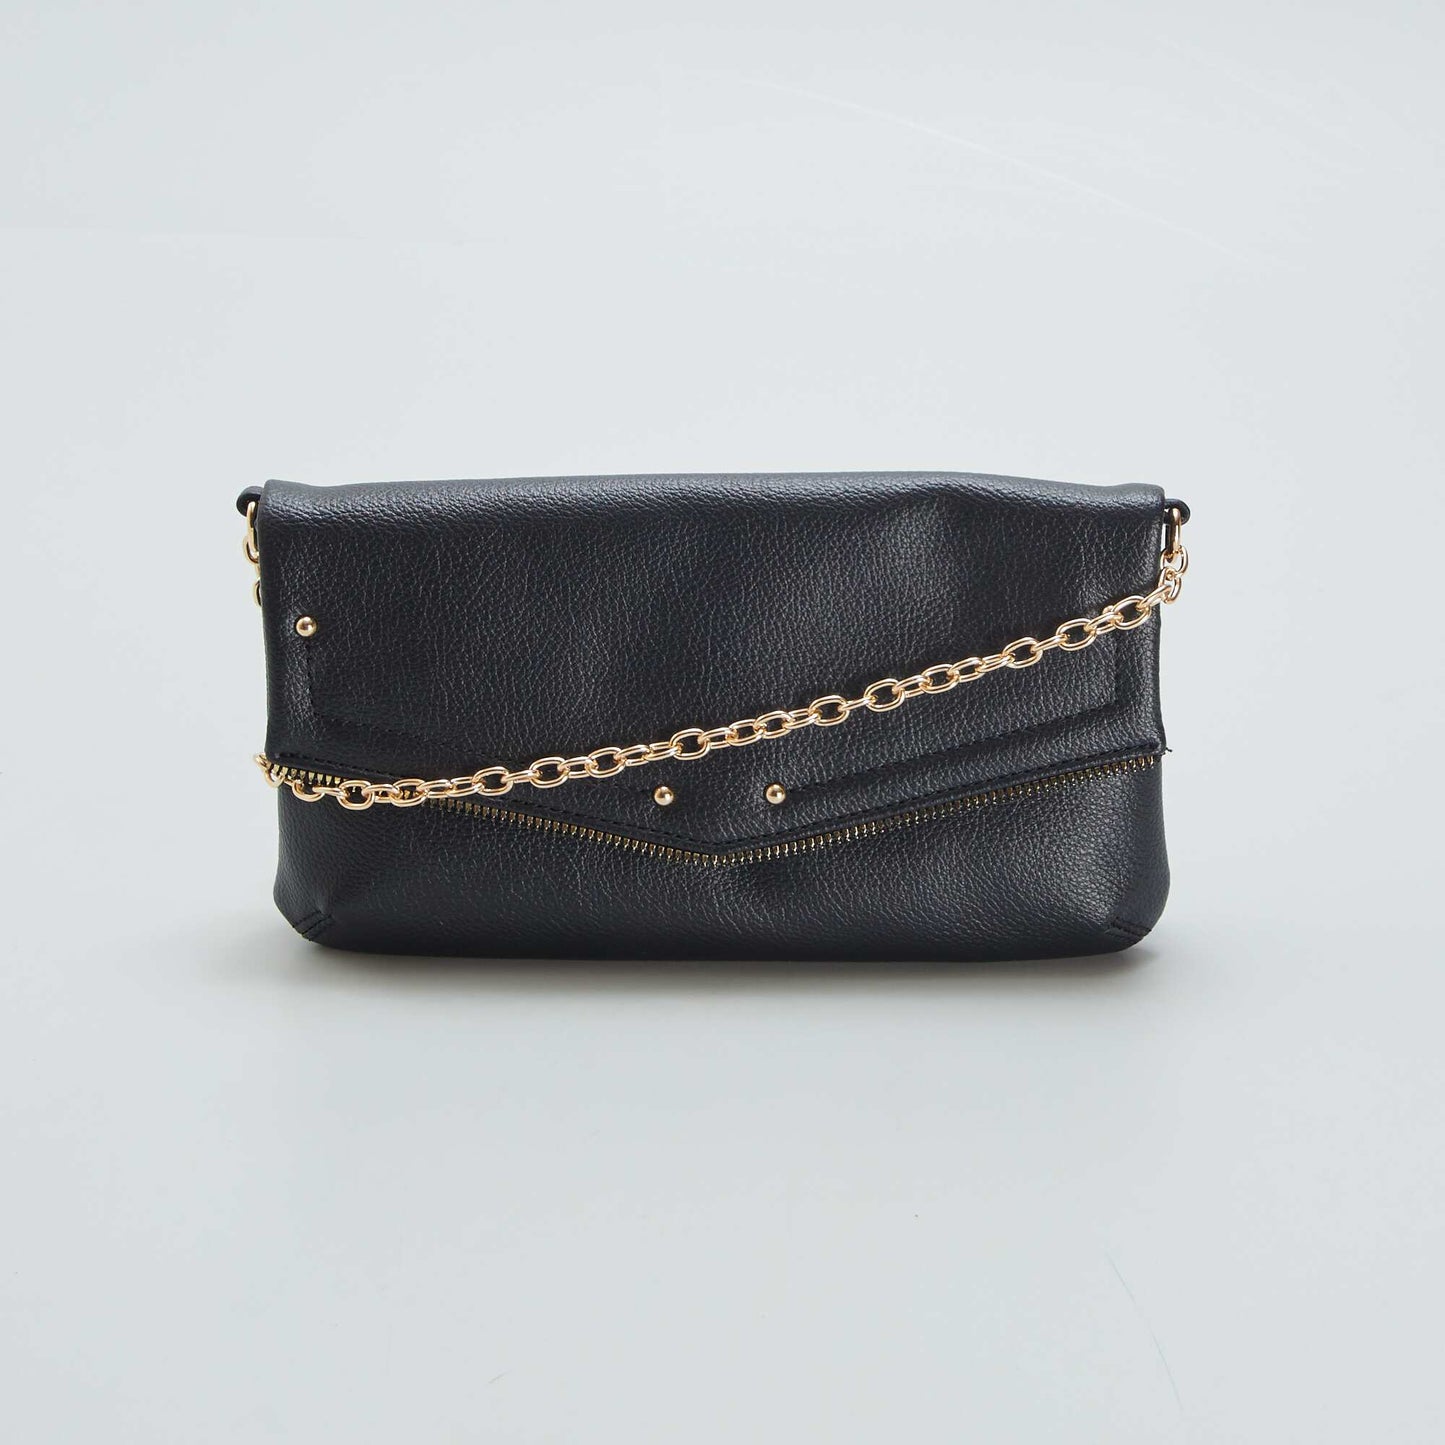 Envelope bag with chain strap BLACK